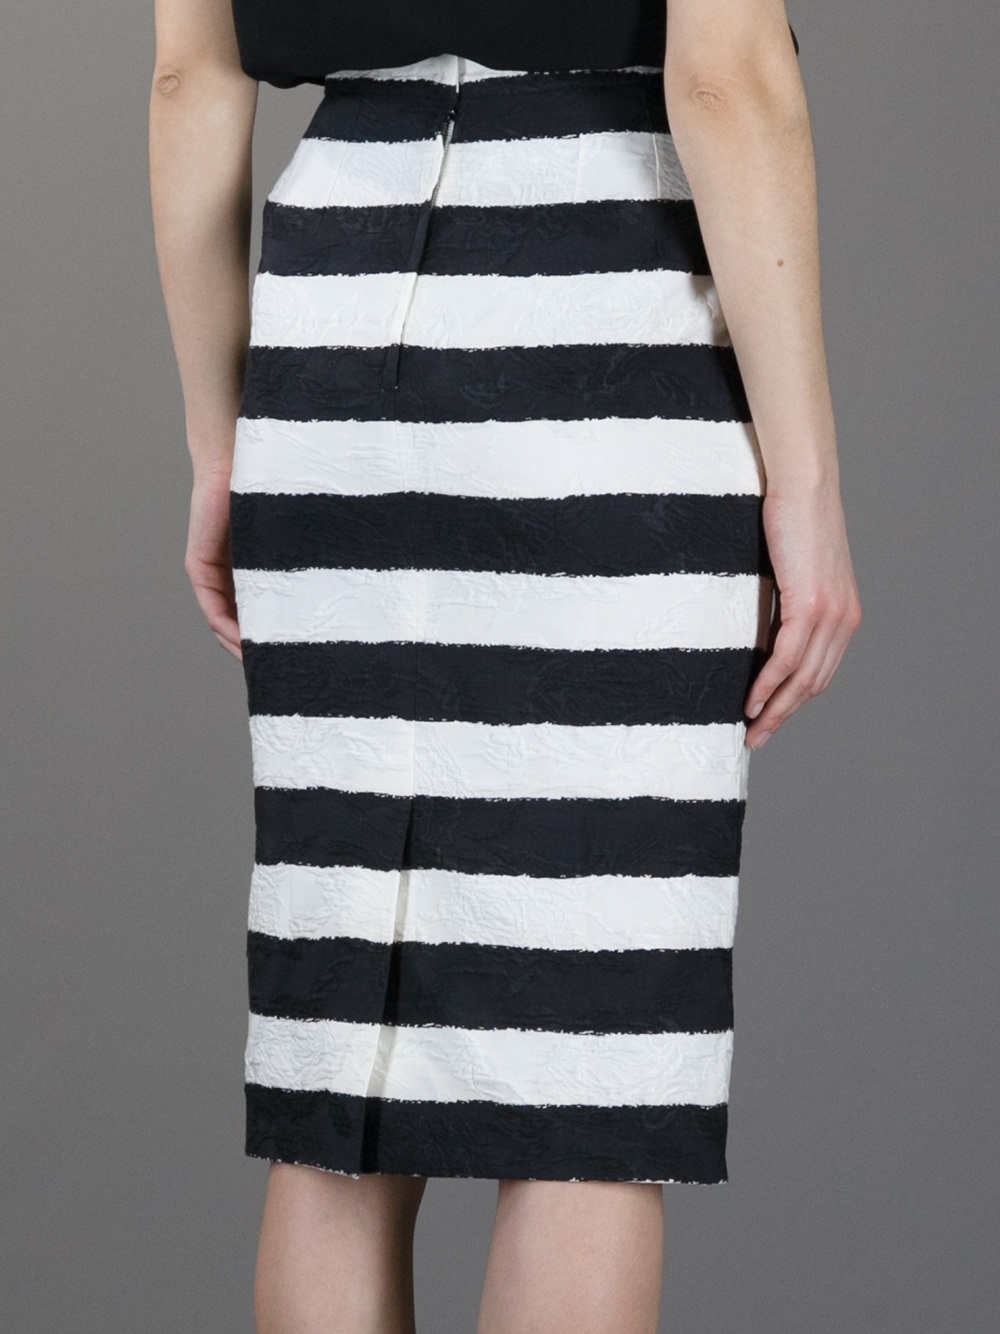 Dolce & gabbana Striped Pencil Skirt in White | Lyst